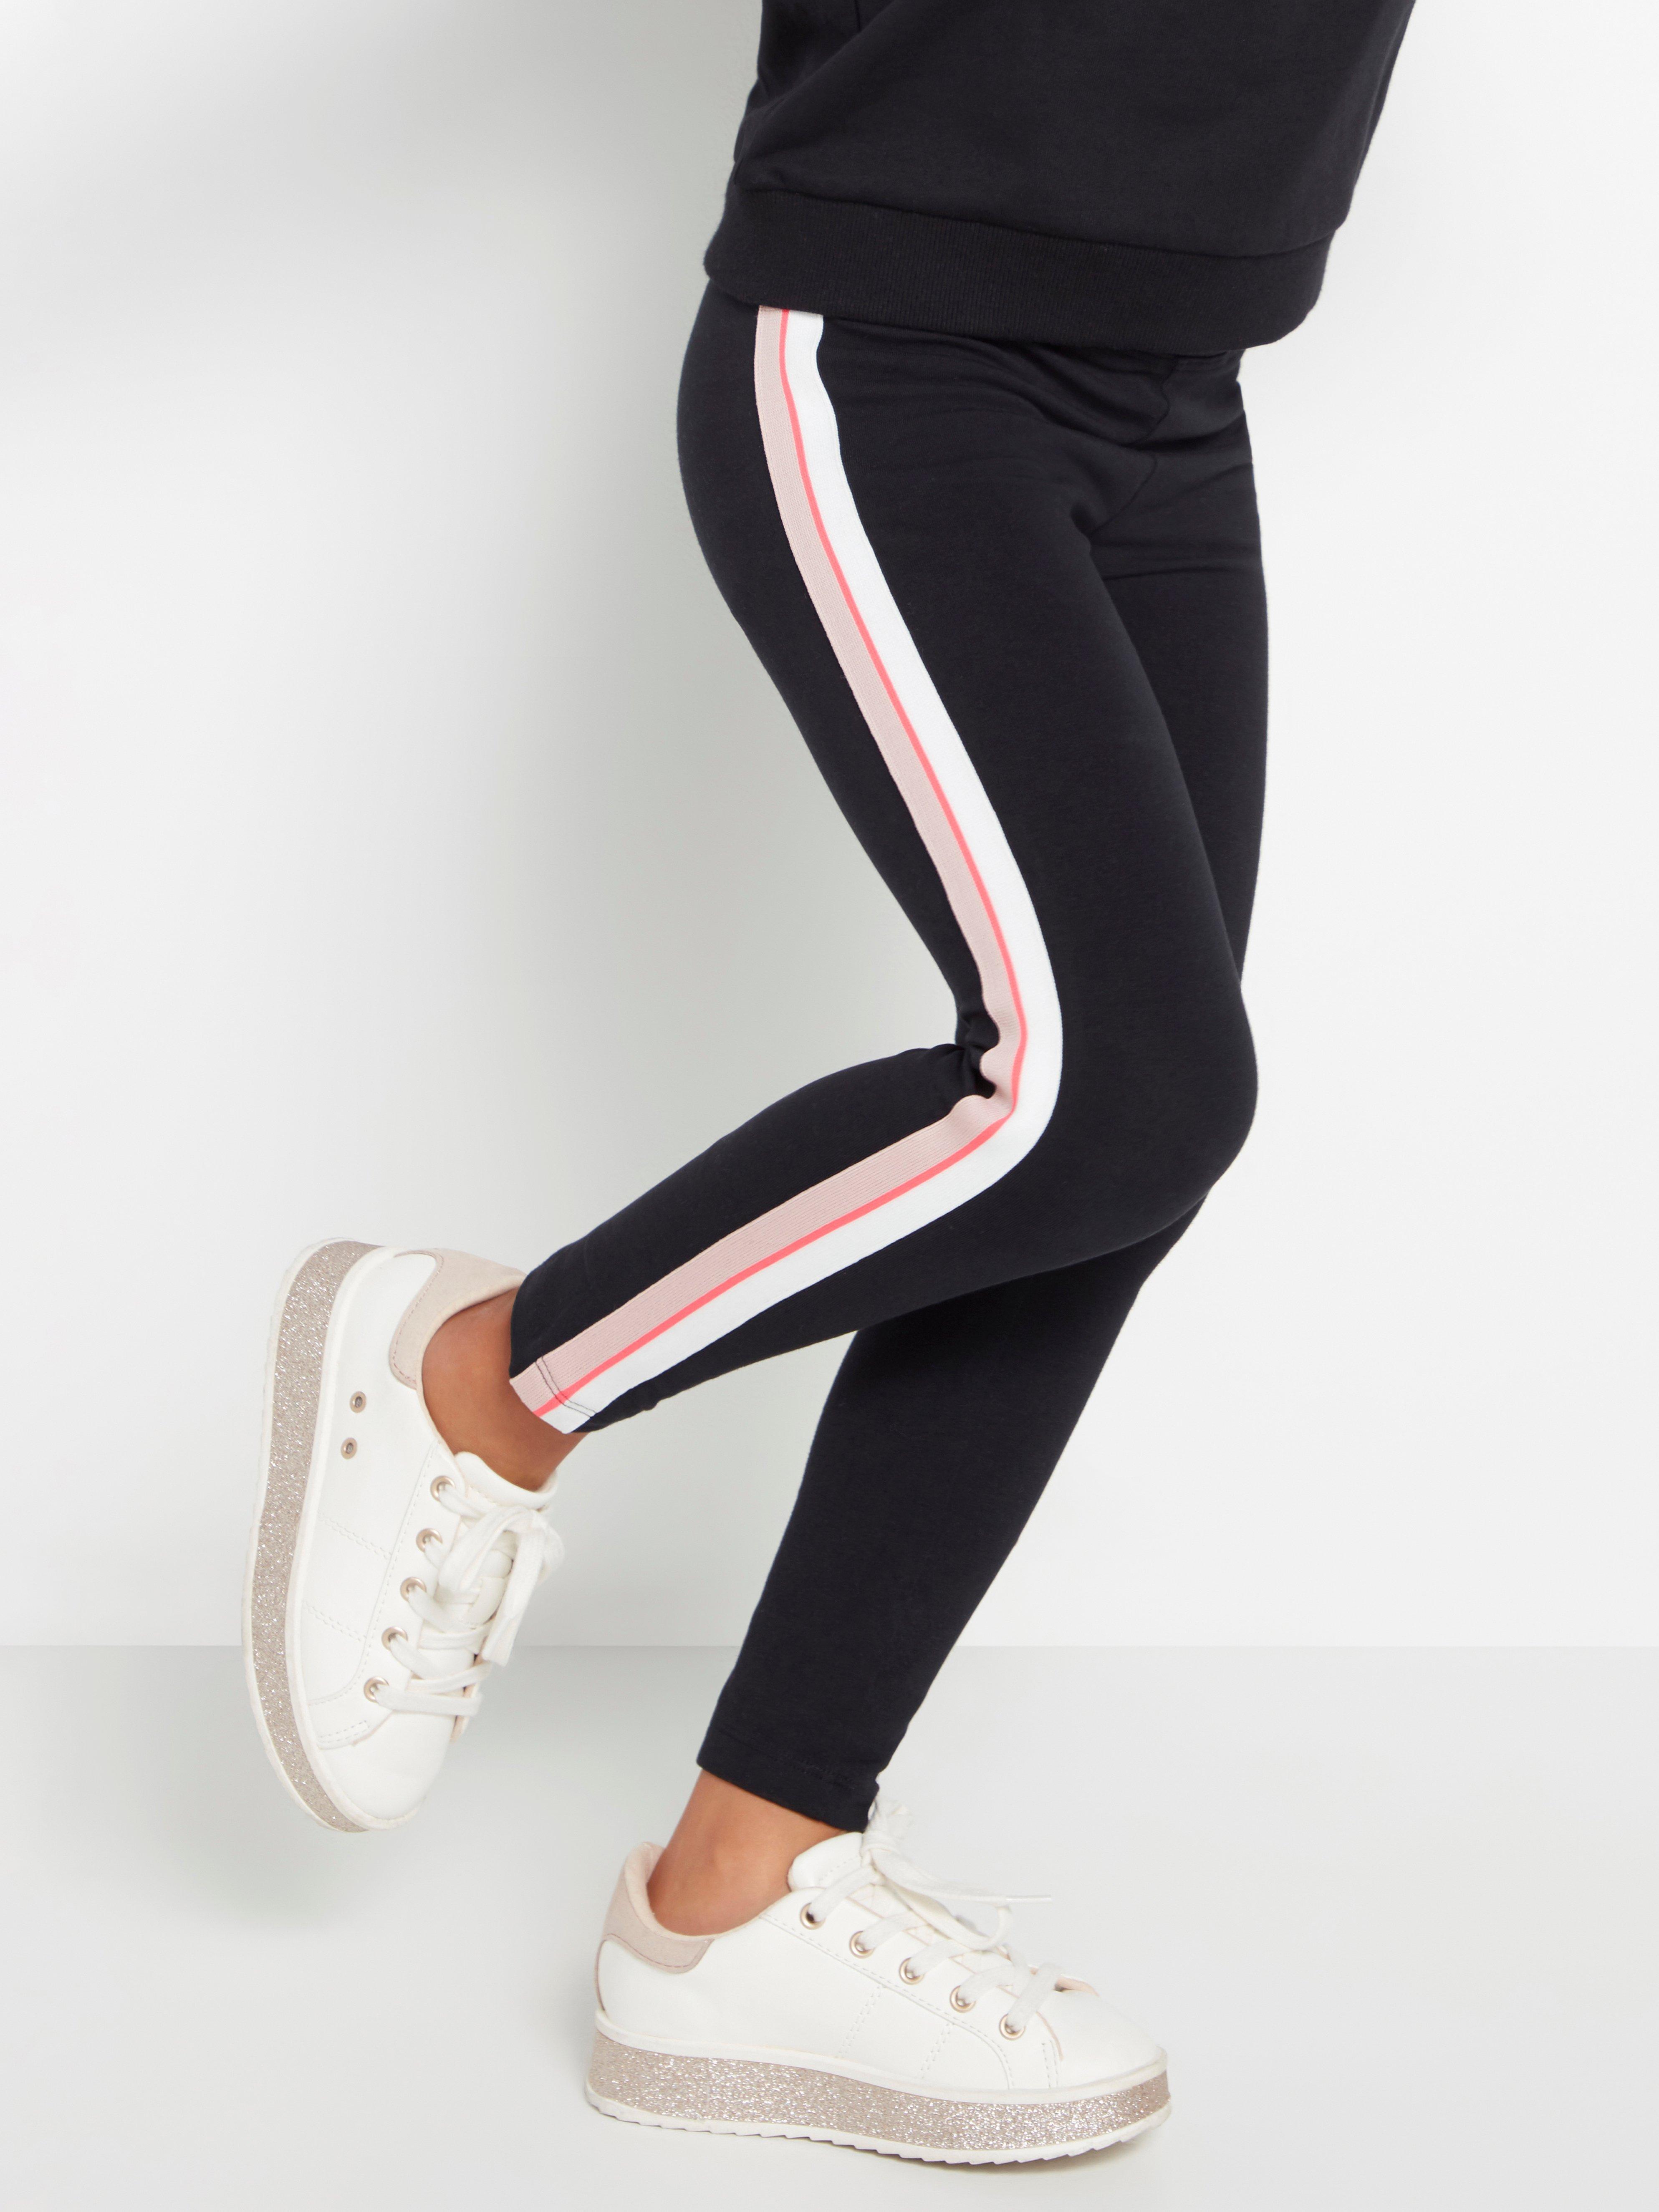 black pants with pink stripe